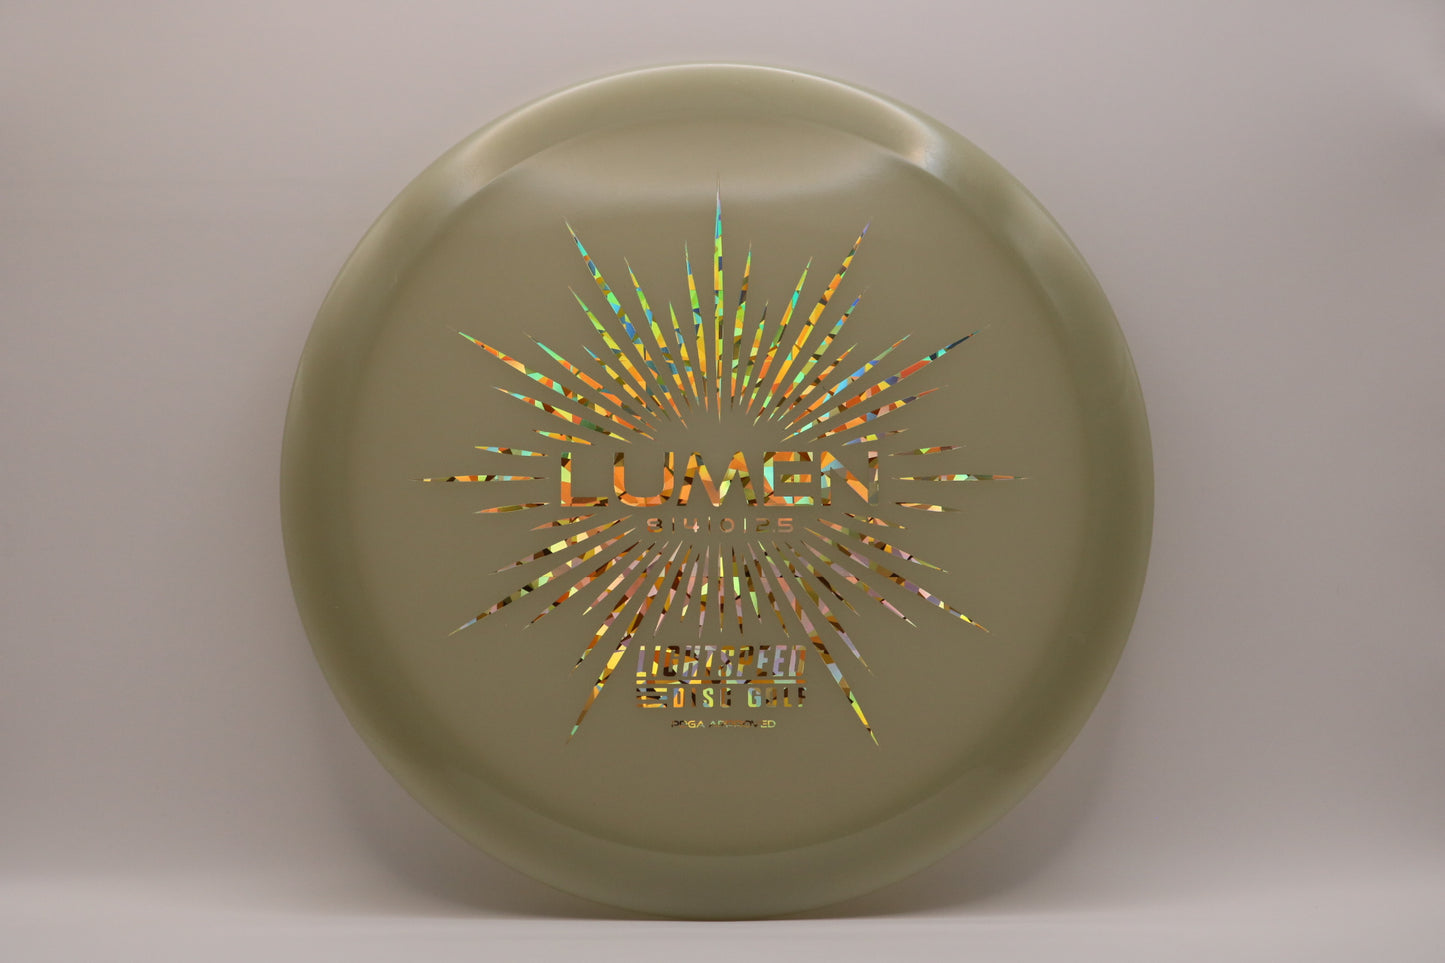 Glow Lumen (7, 6, -1, 2)